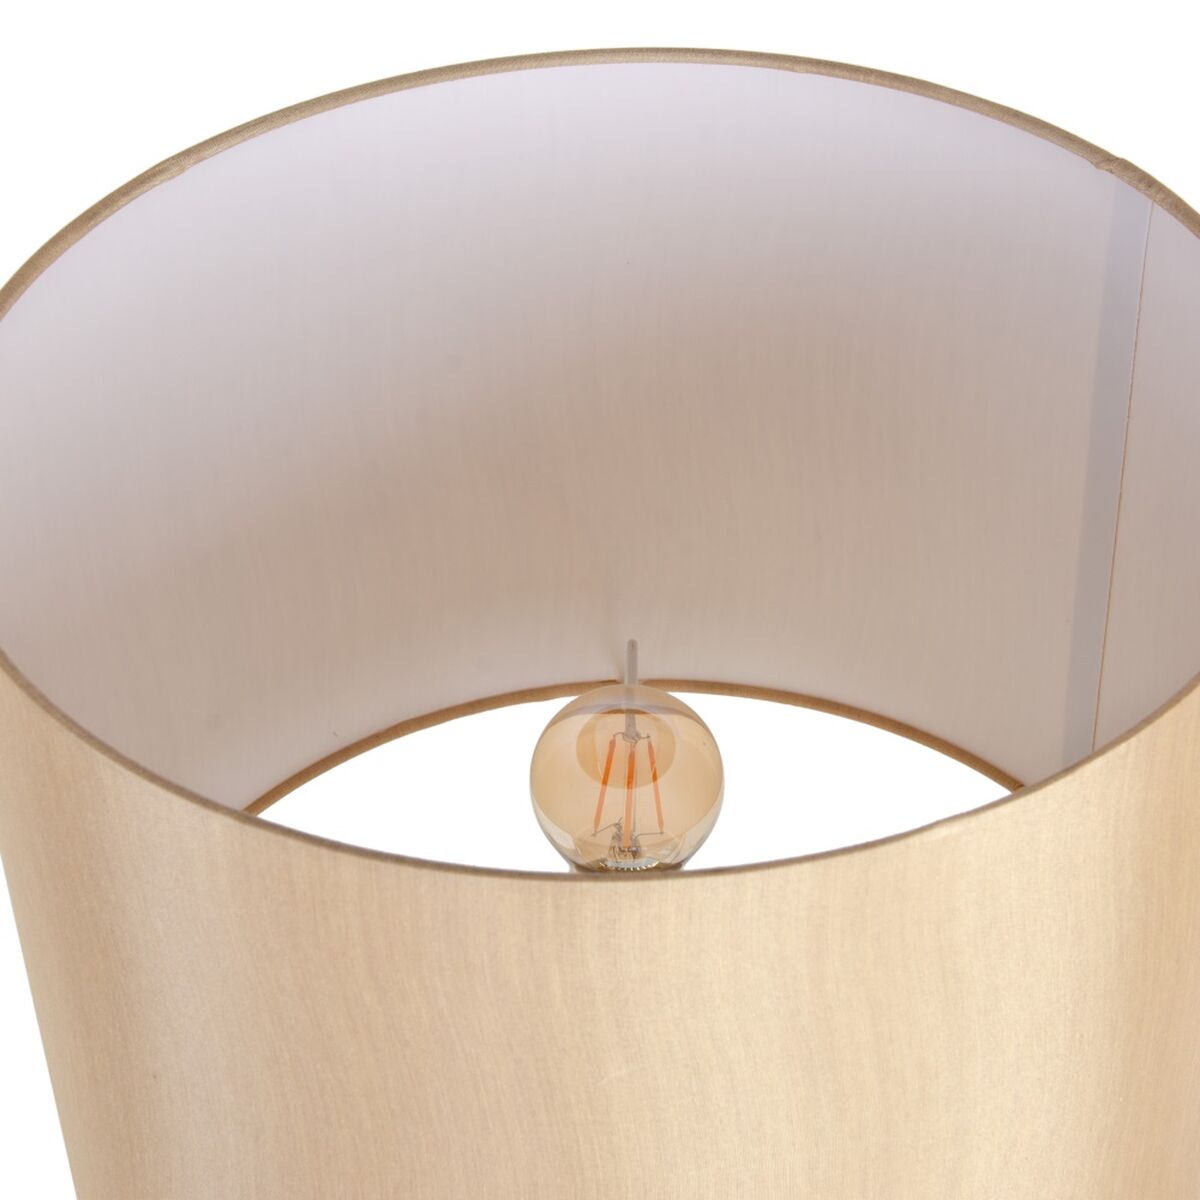 Table lamp gold ridges design